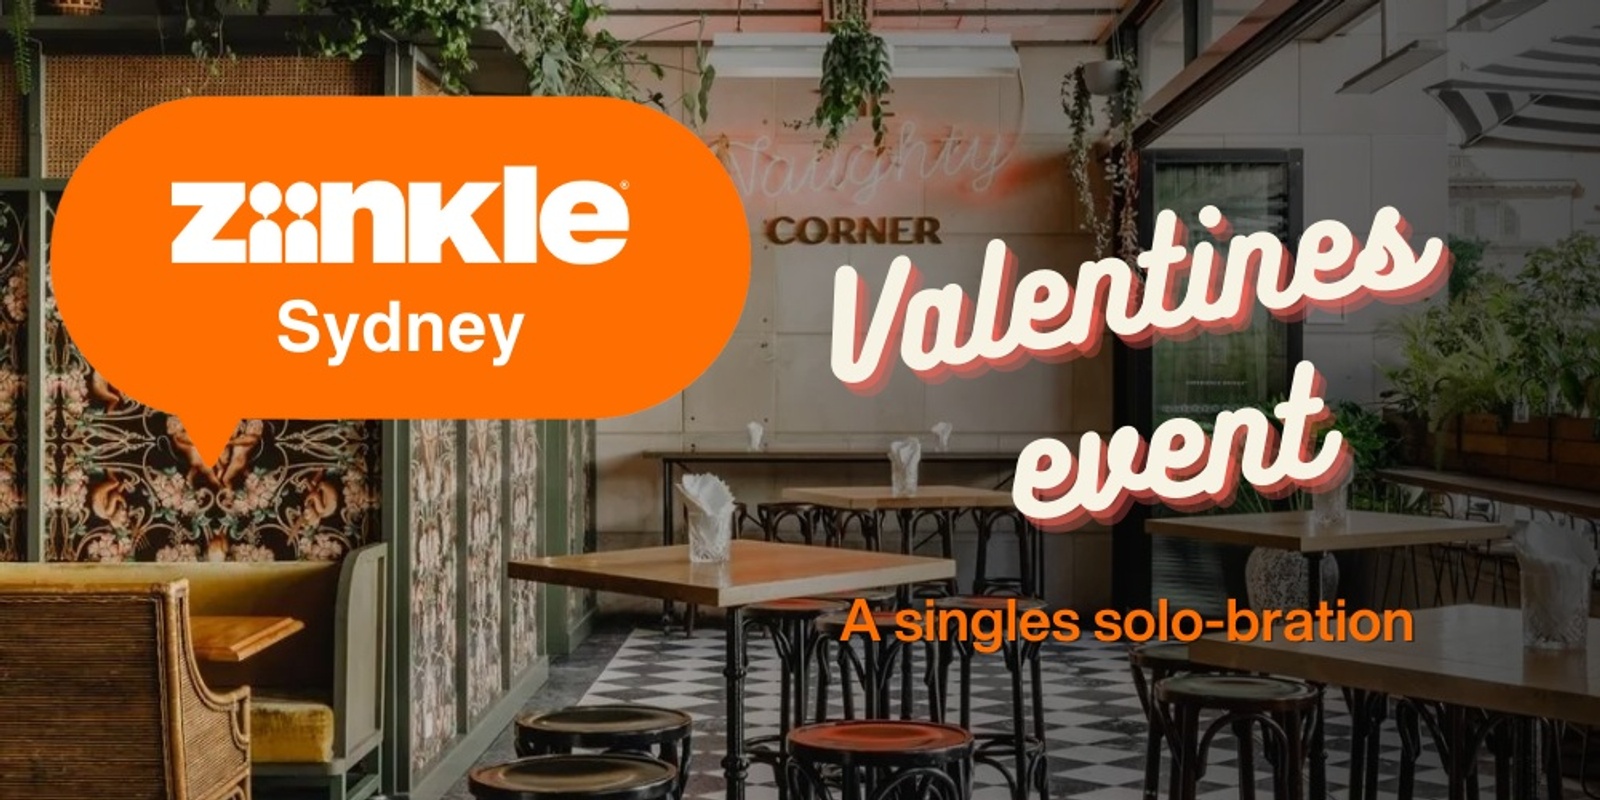 Banner image for Ziinkle: Valentines Event, Sydney